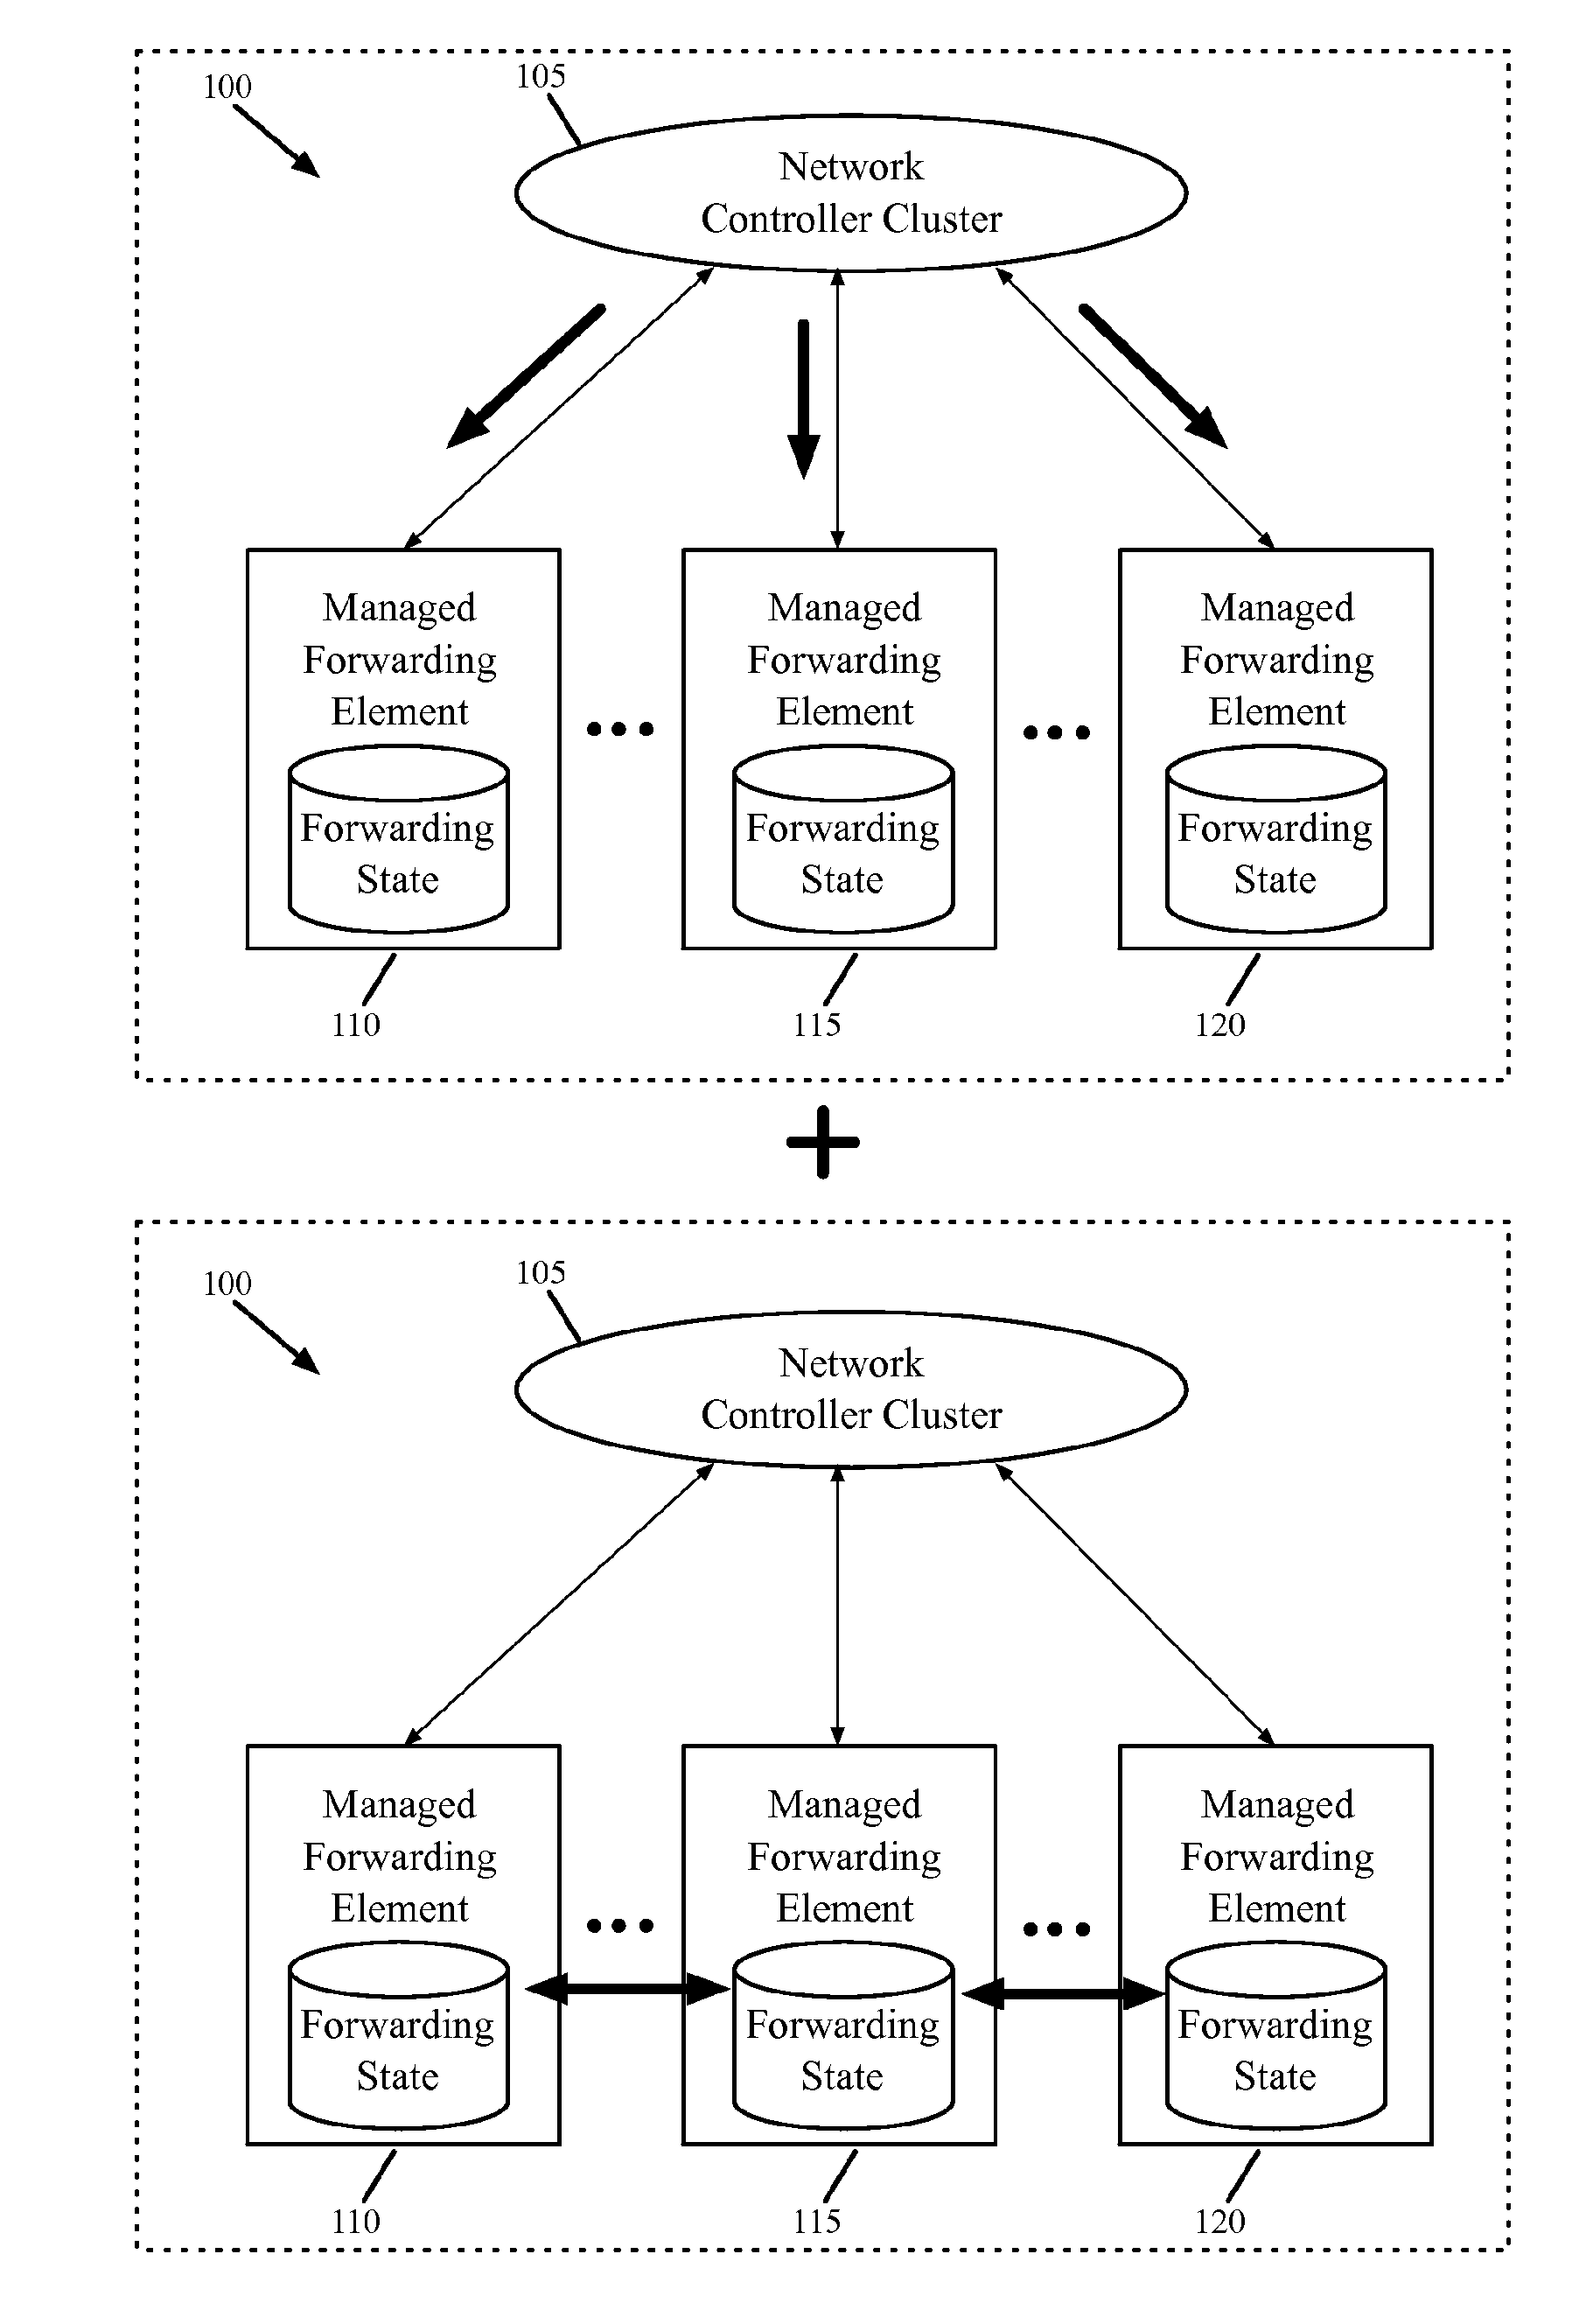 Exchange of network state information between forwarding elements